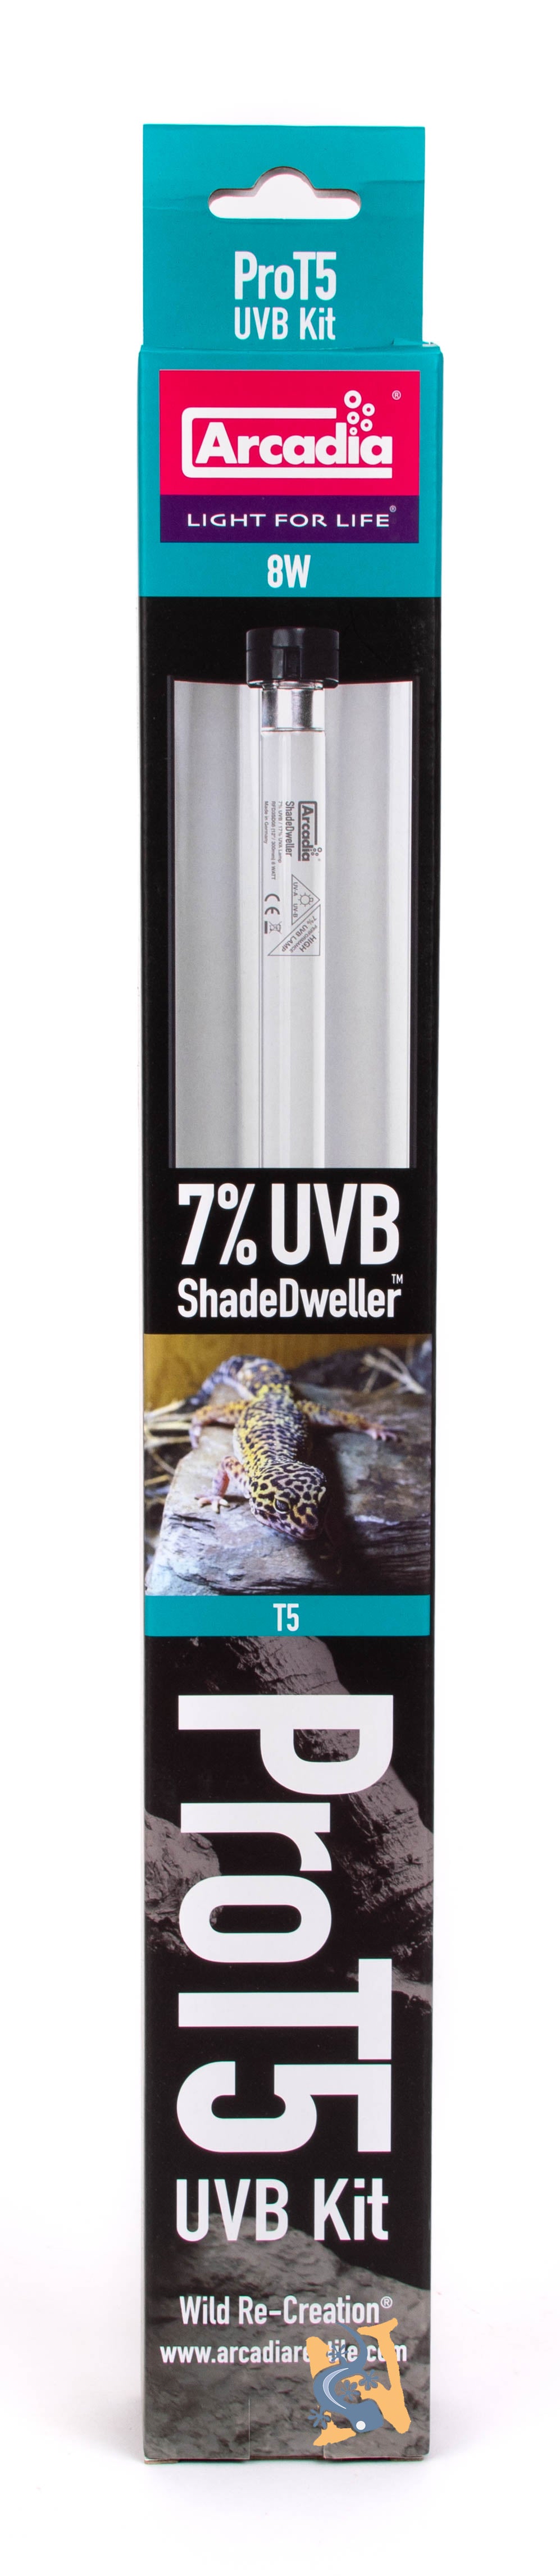 Arcadia ShadeDweller Pro T5 UVB Kit, 12